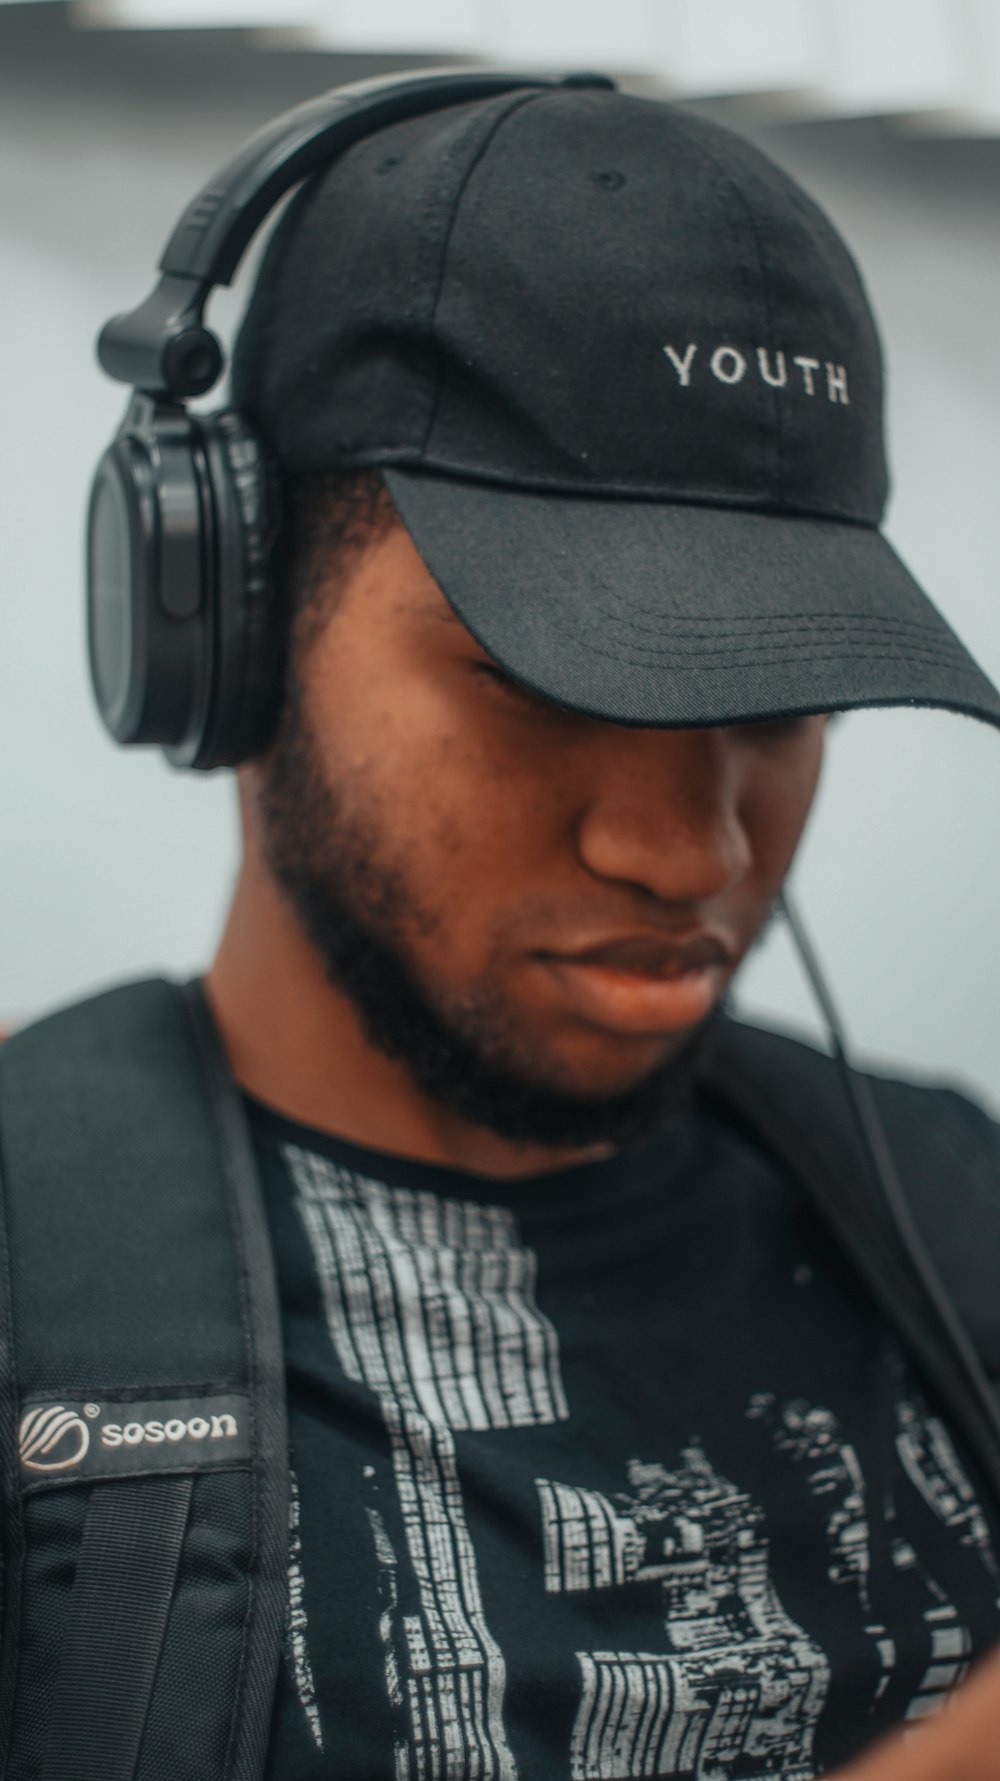 man in black crew neck shirt wearing black headphones